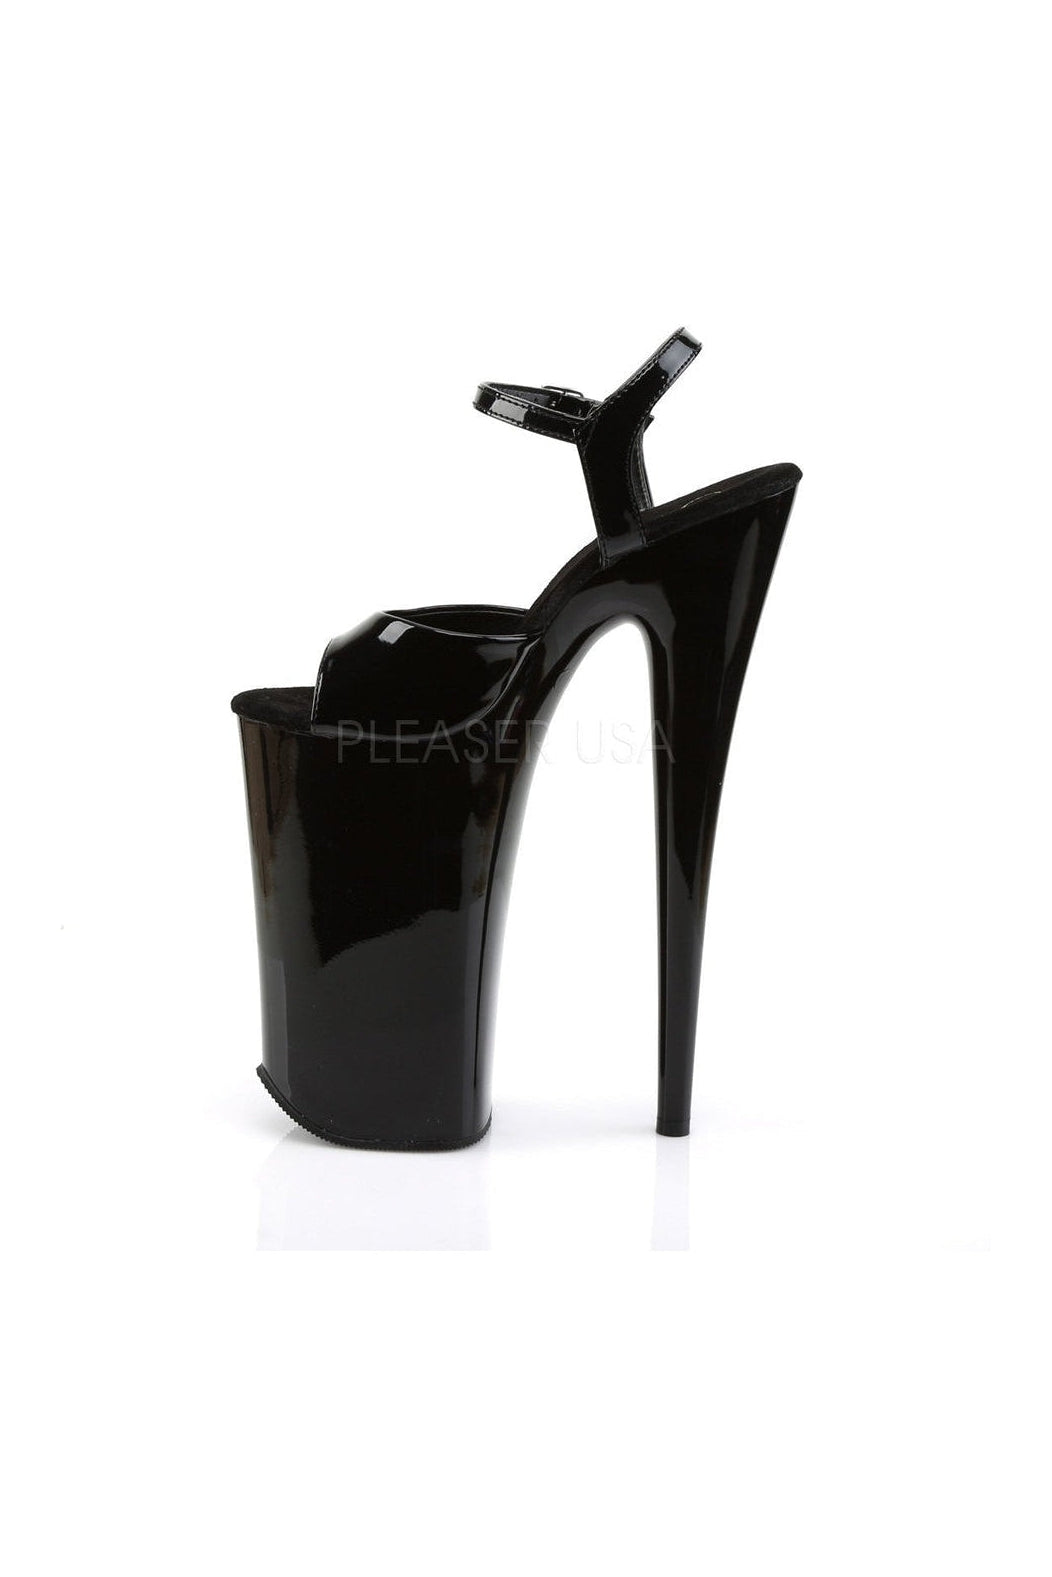 BEYOND-009 Platform Sandal | Black Patent-Pleaser-Sandals-SEXYSHOES.COM